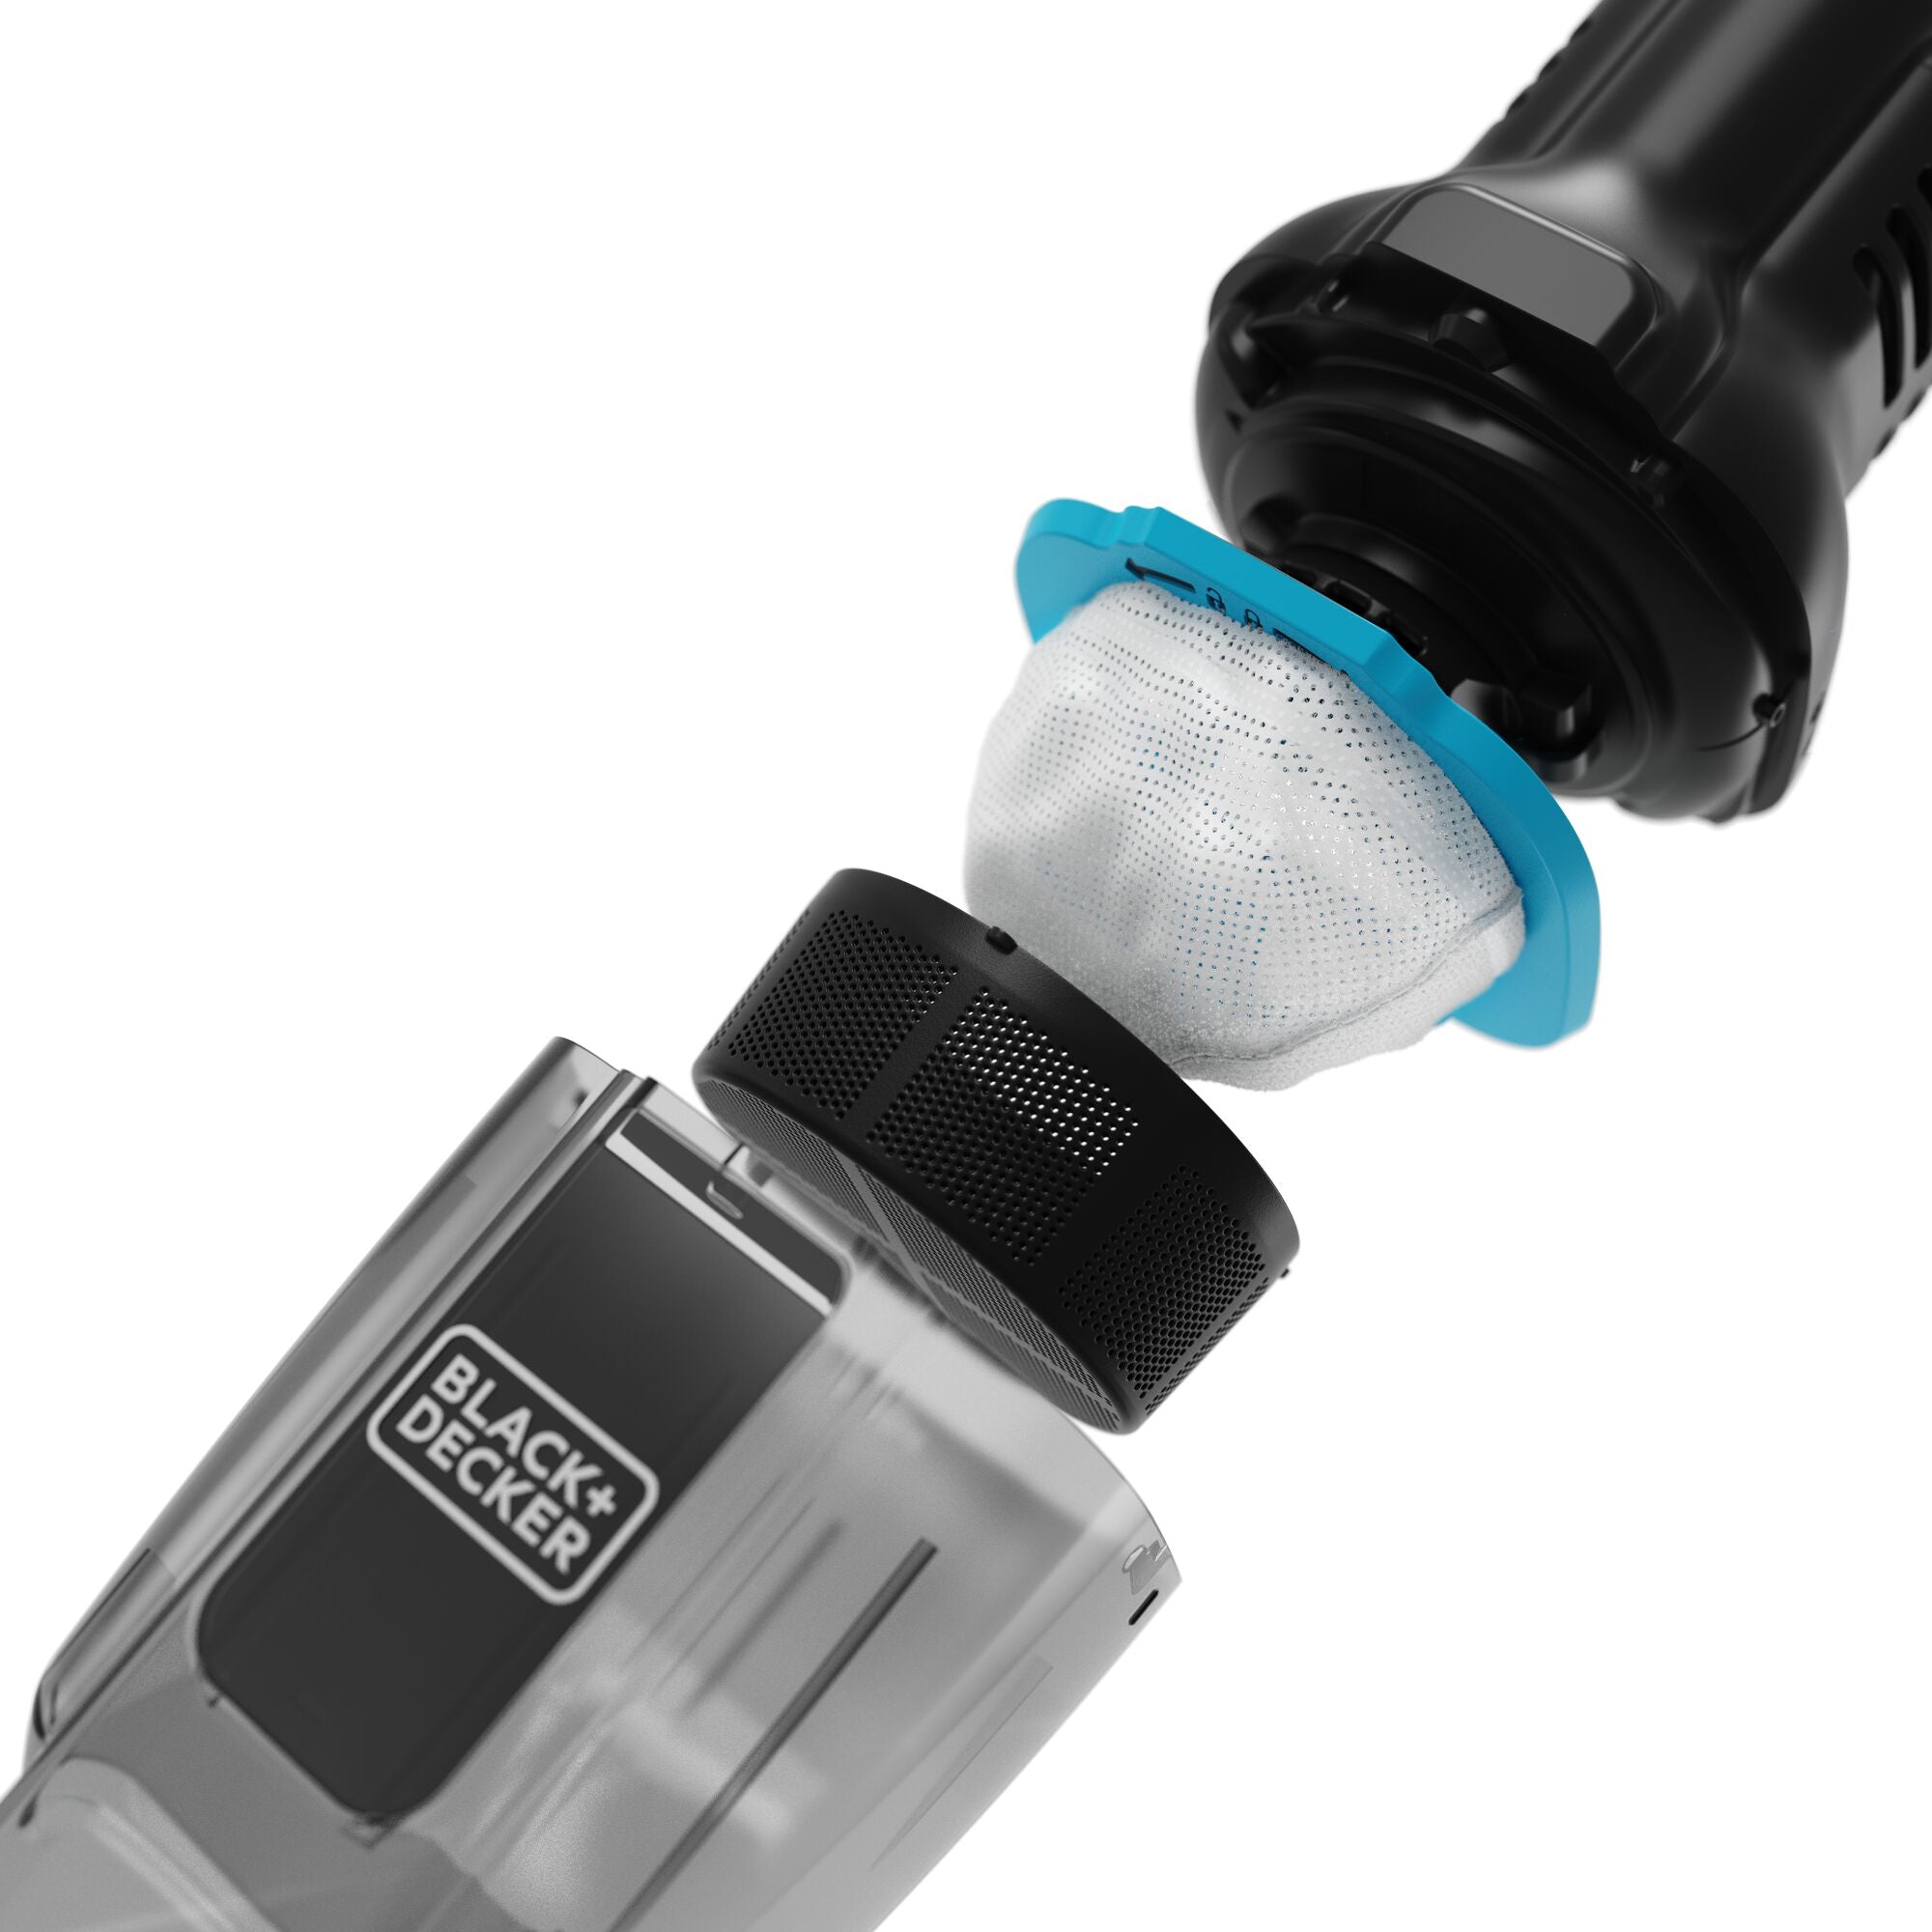 BLACK+DECKER dustbuster cordless hand vacuum on/off button